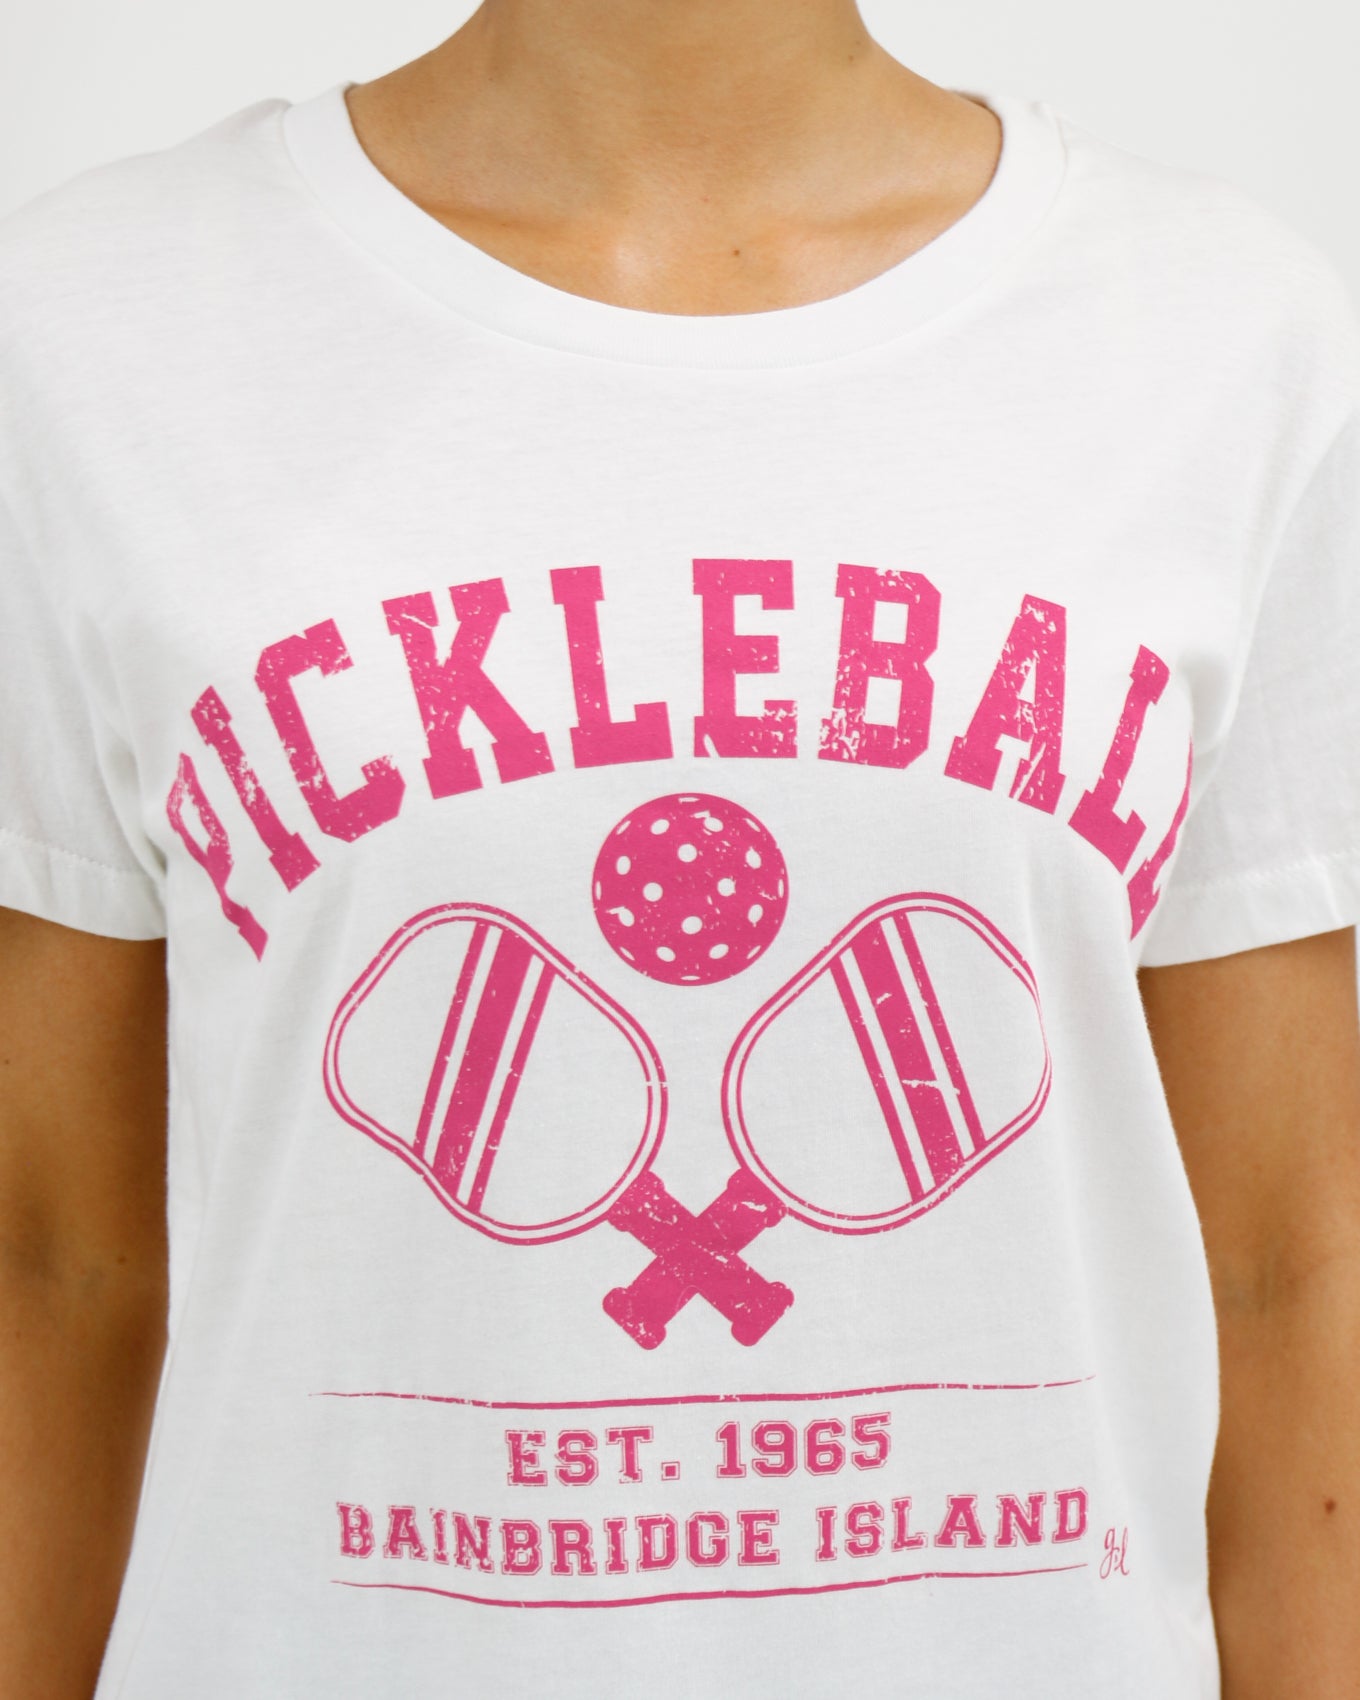 Pickleball shirts